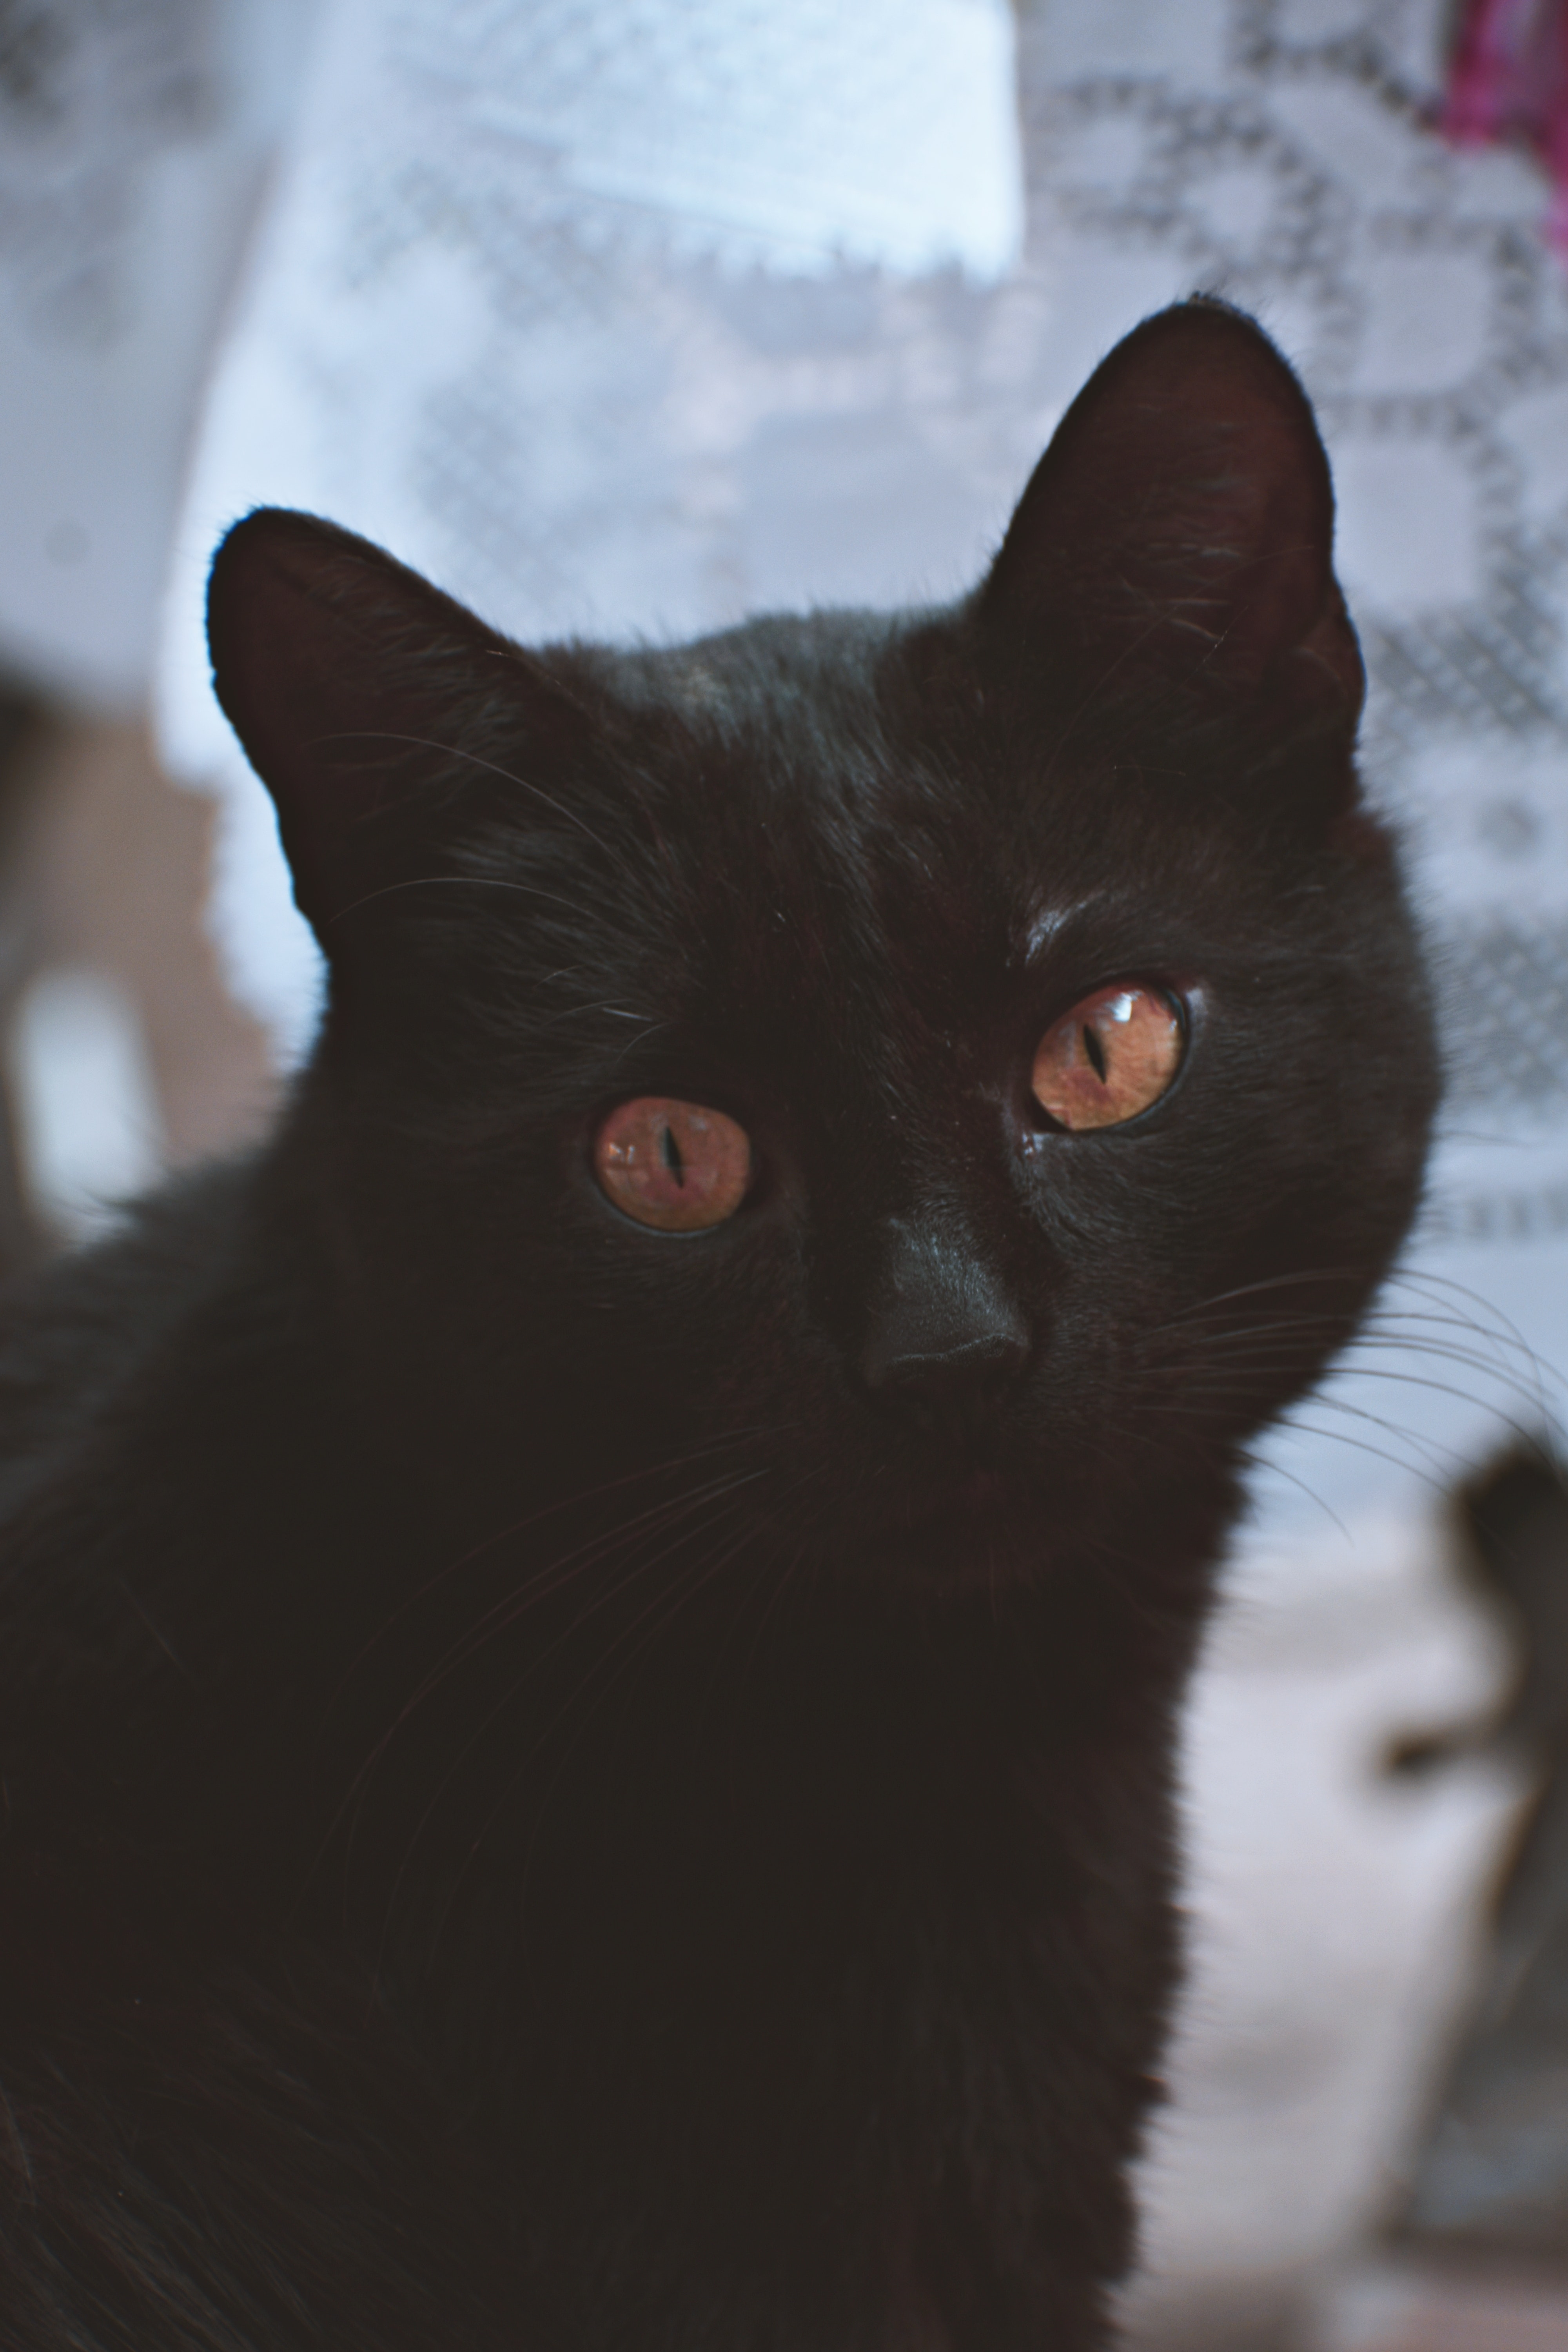 Black Cat Staring